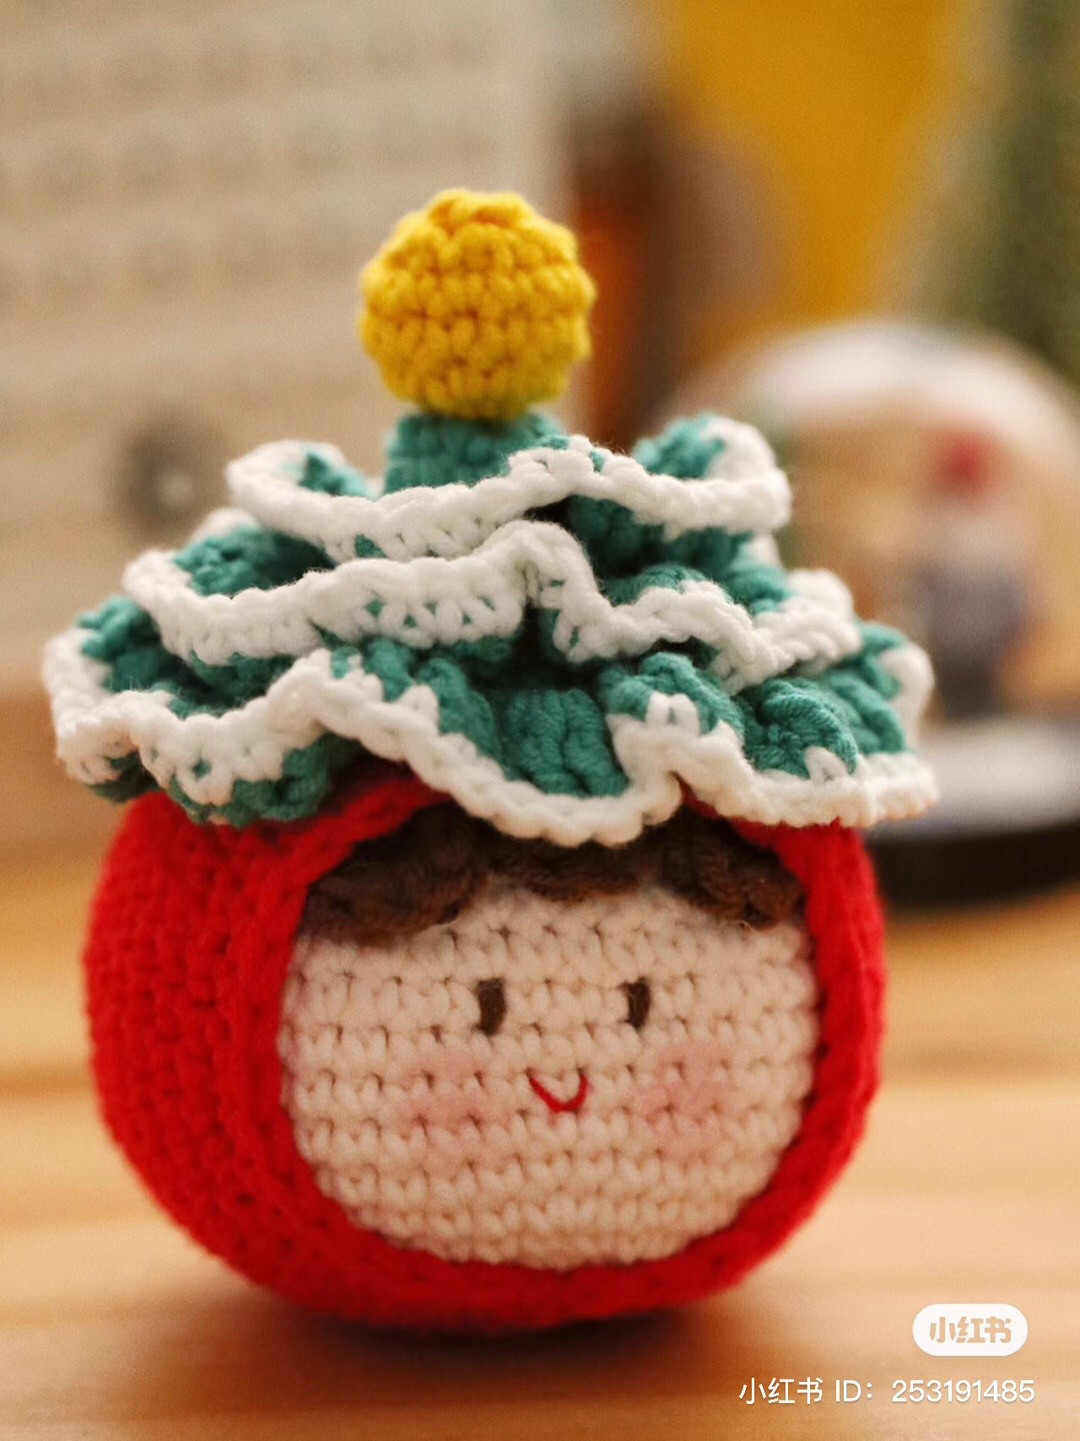 Crochet patterns for deer mochi, Christmas tree mochi, star mochi...